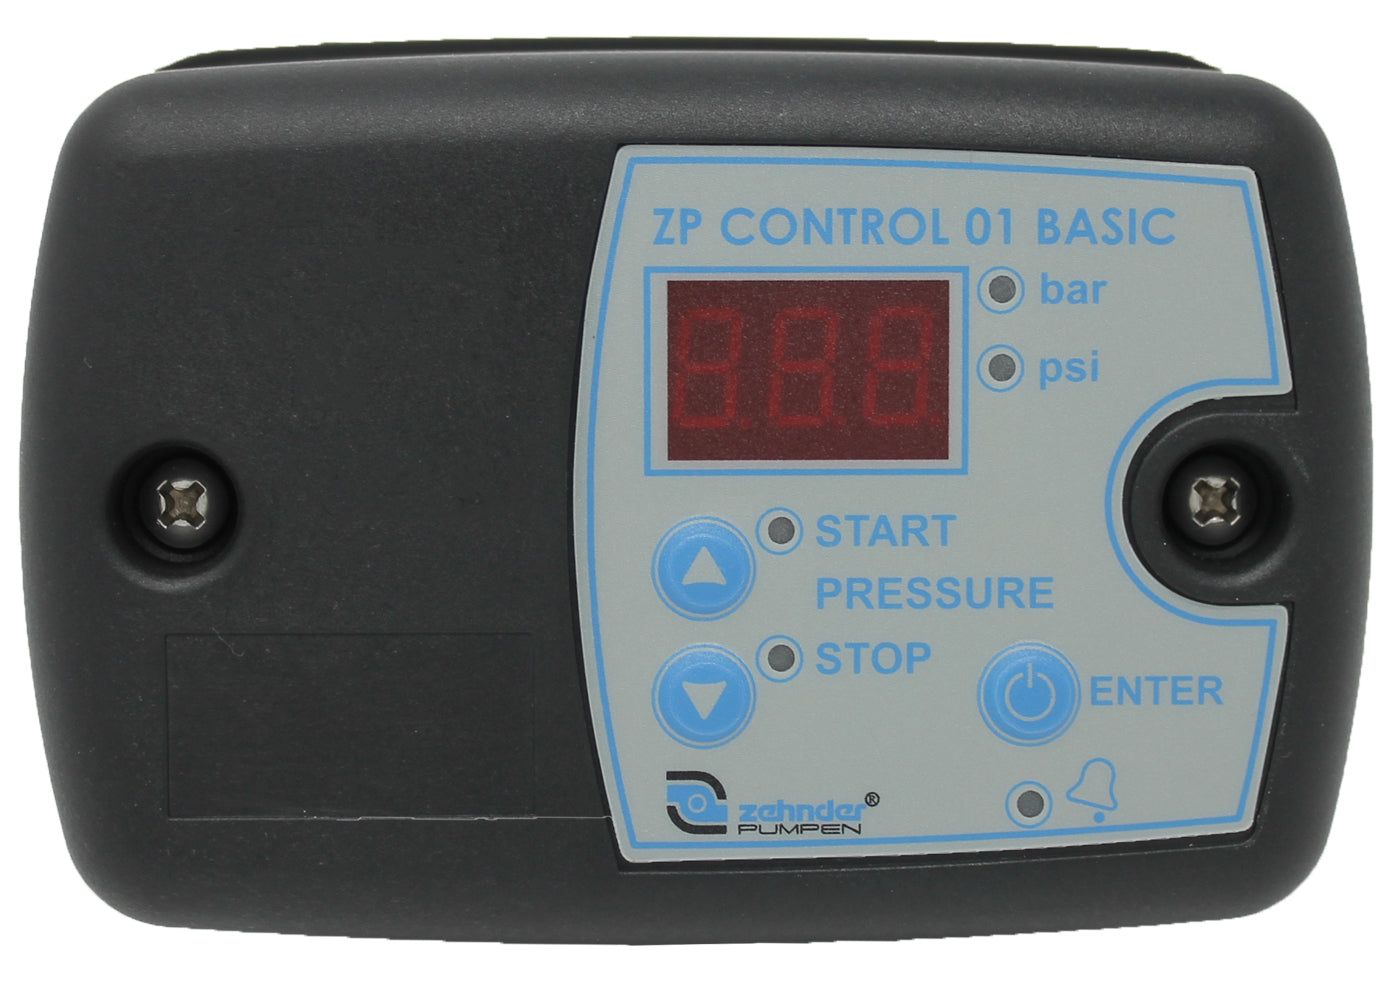 ZP Control 01 Basic